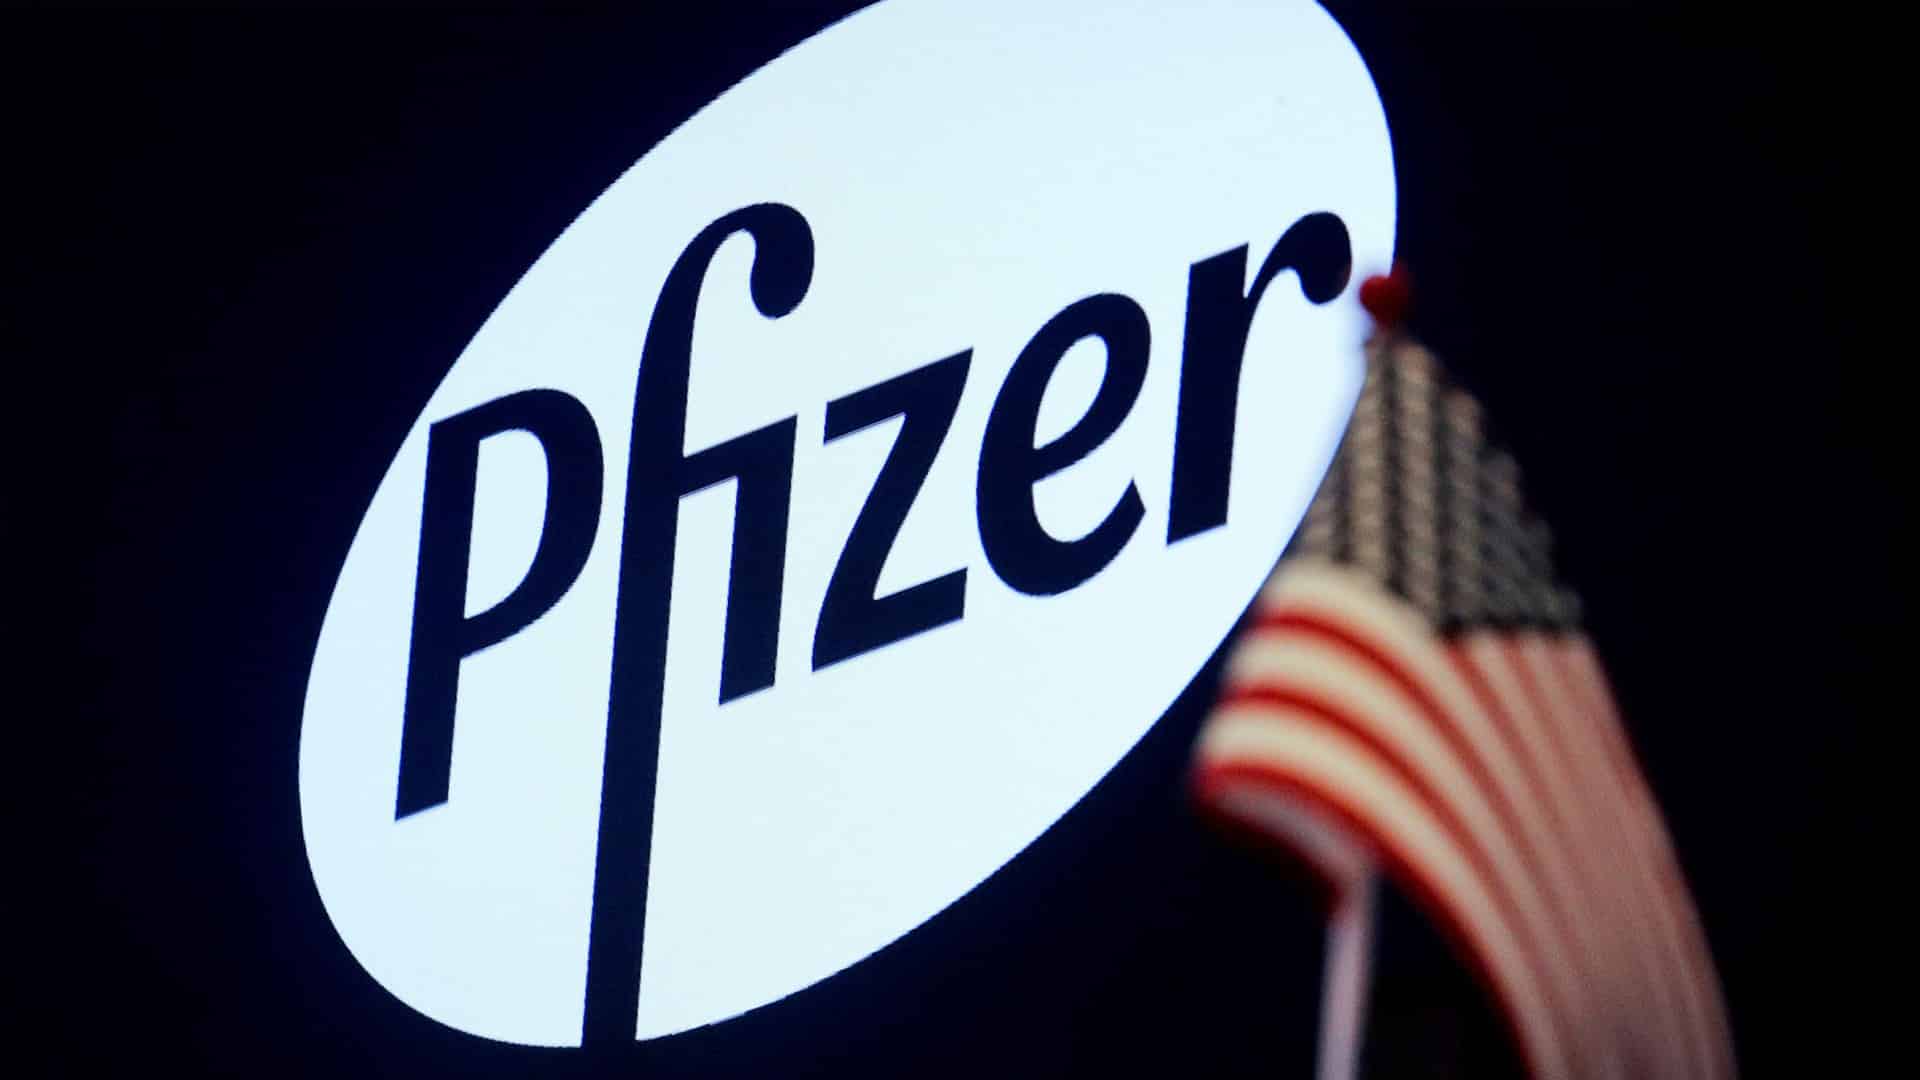 Pfizer moves US court against Aurobindo Pharma, Dr Reddy's on cancer drug